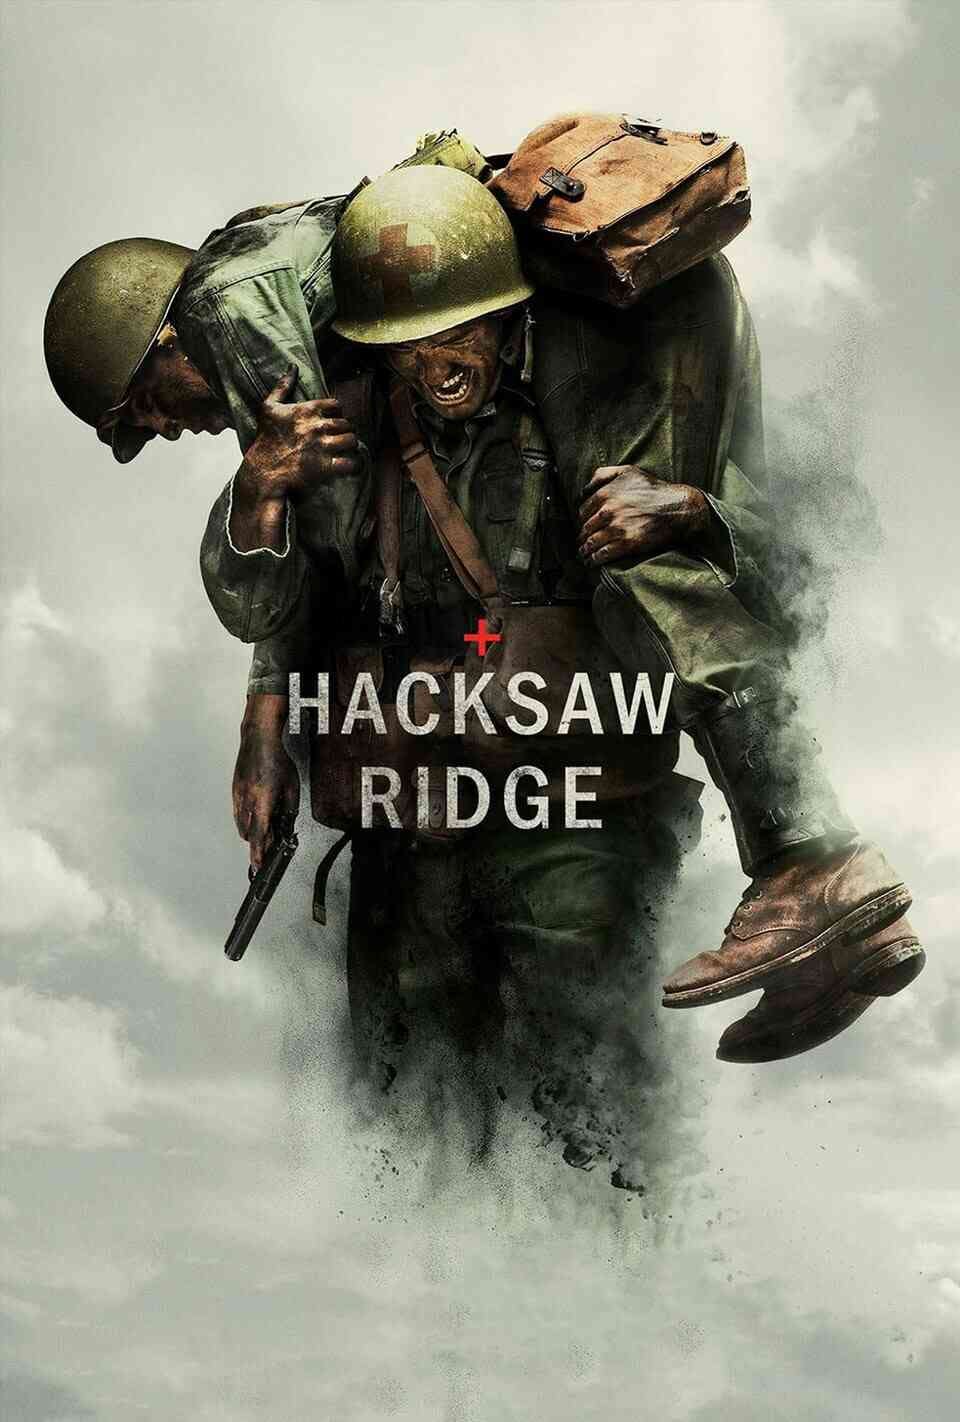 Read Hacksaw Ridge screenplay (poster)